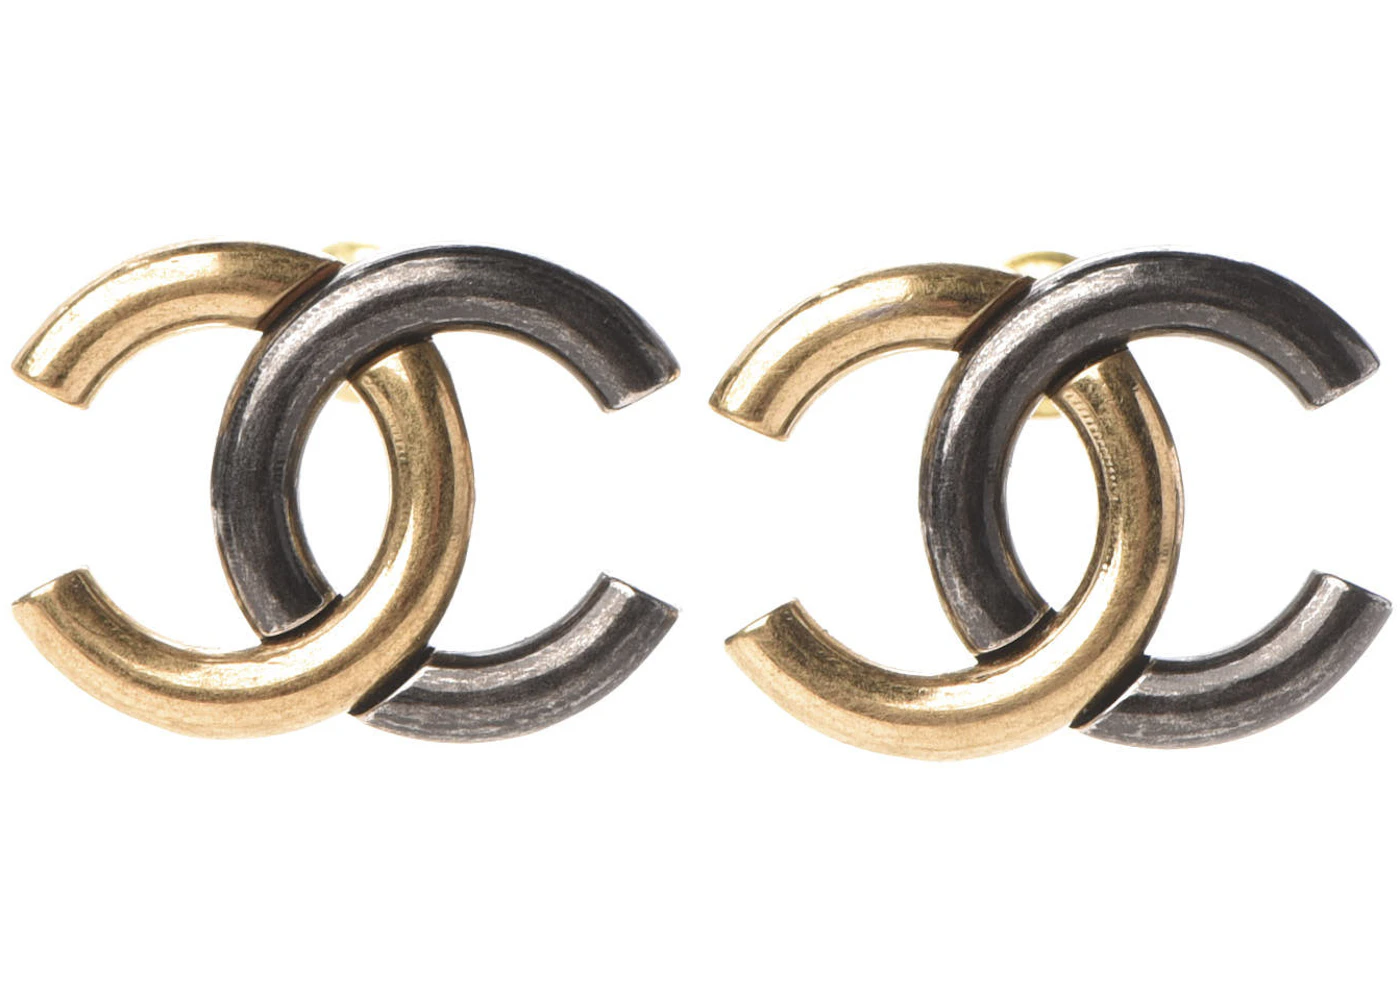 Light Gold Metal CC Earrings, 2017